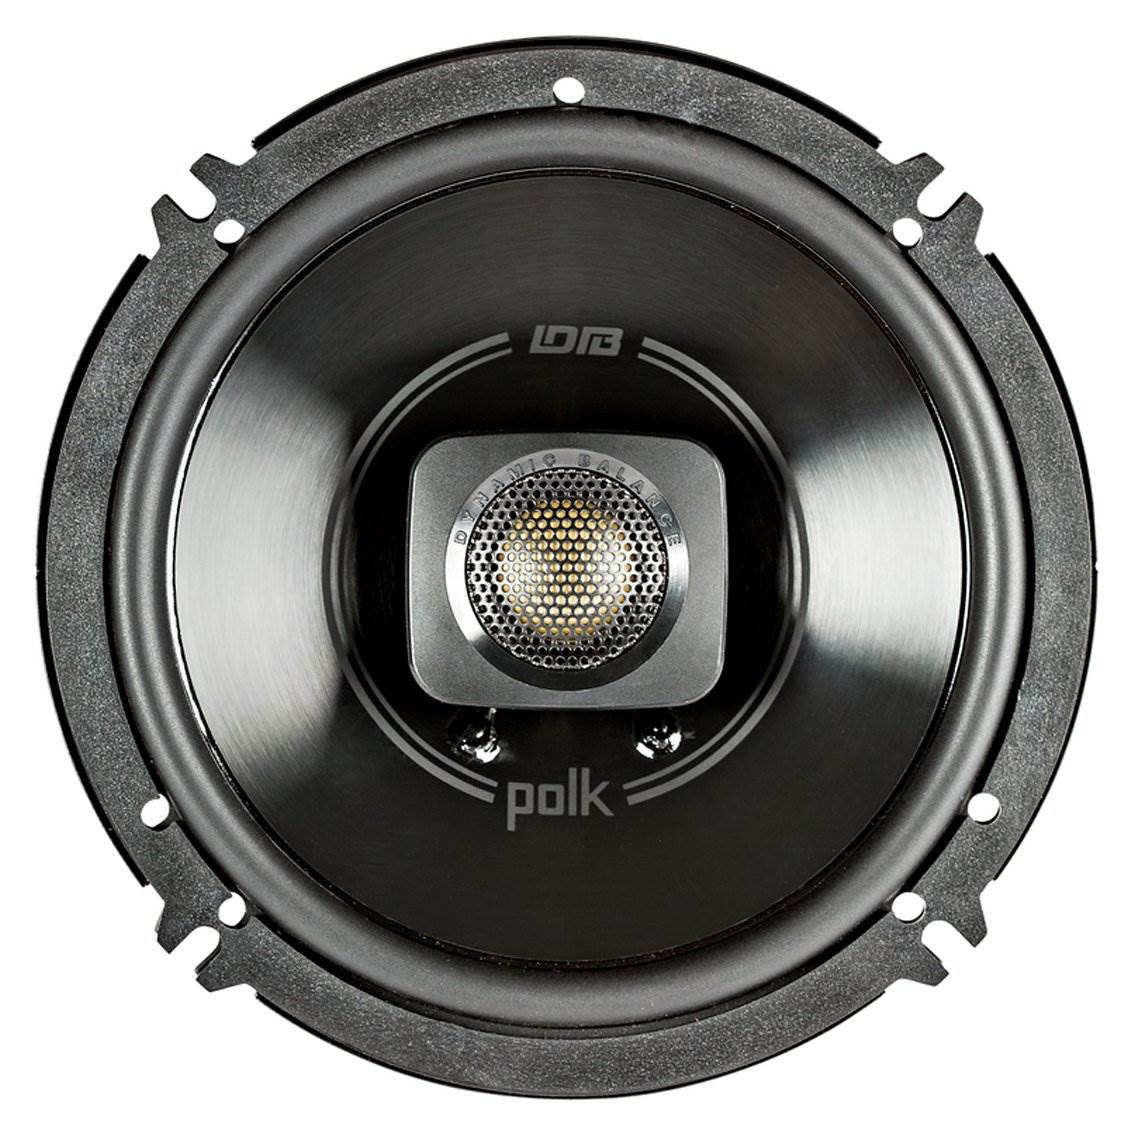 Polk Audio 6.5-Inch 300W 2 Way Speakers + Boss 6.5-Inch 300W 3 Way Speakers - image 3 of 12